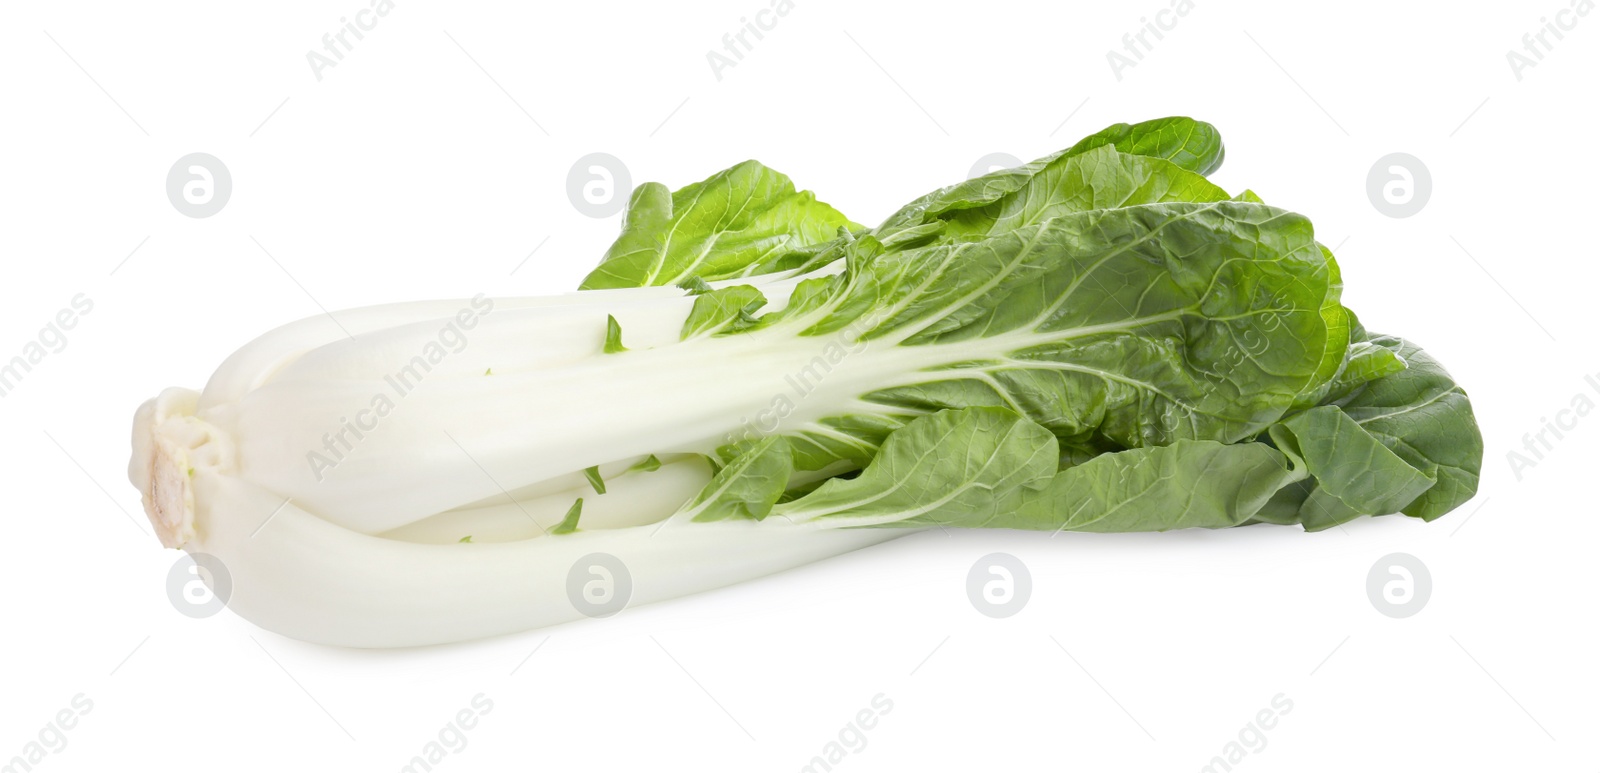 Photo of Fresh green pak choy cabbage isolated on white